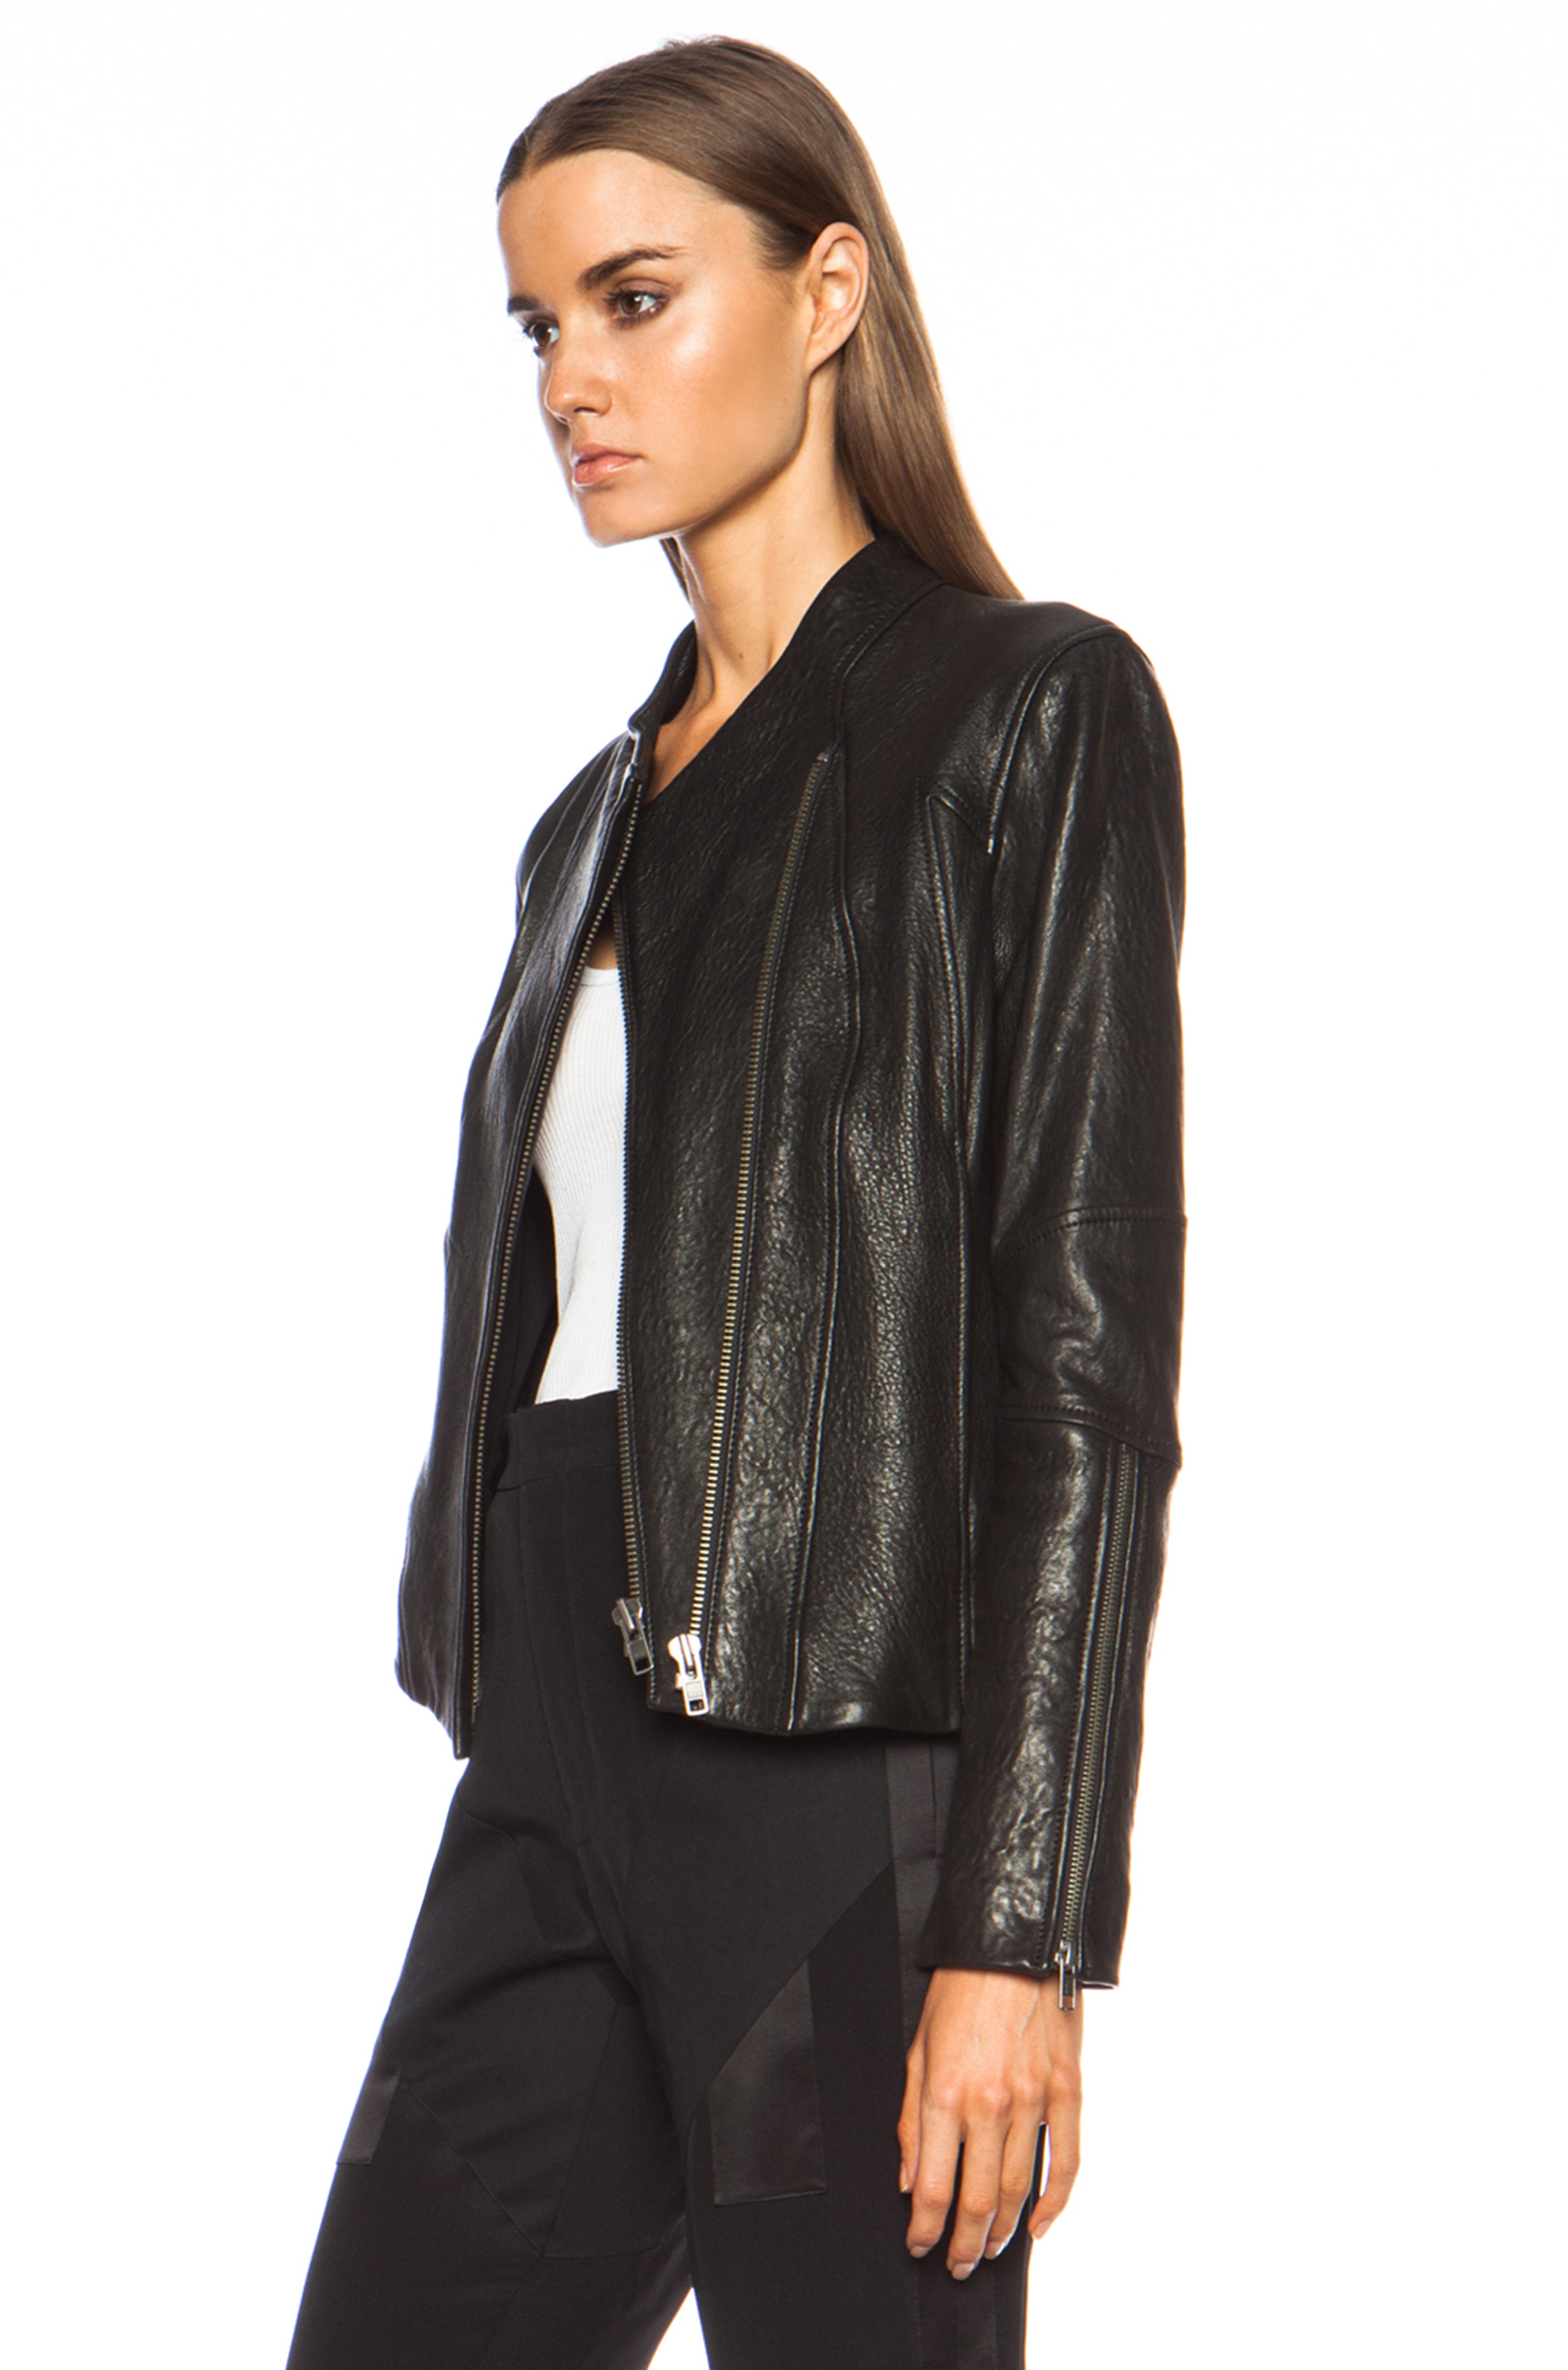 Helmut Lang Asymmetric Blistered Leather Jacket in Black - Lyst